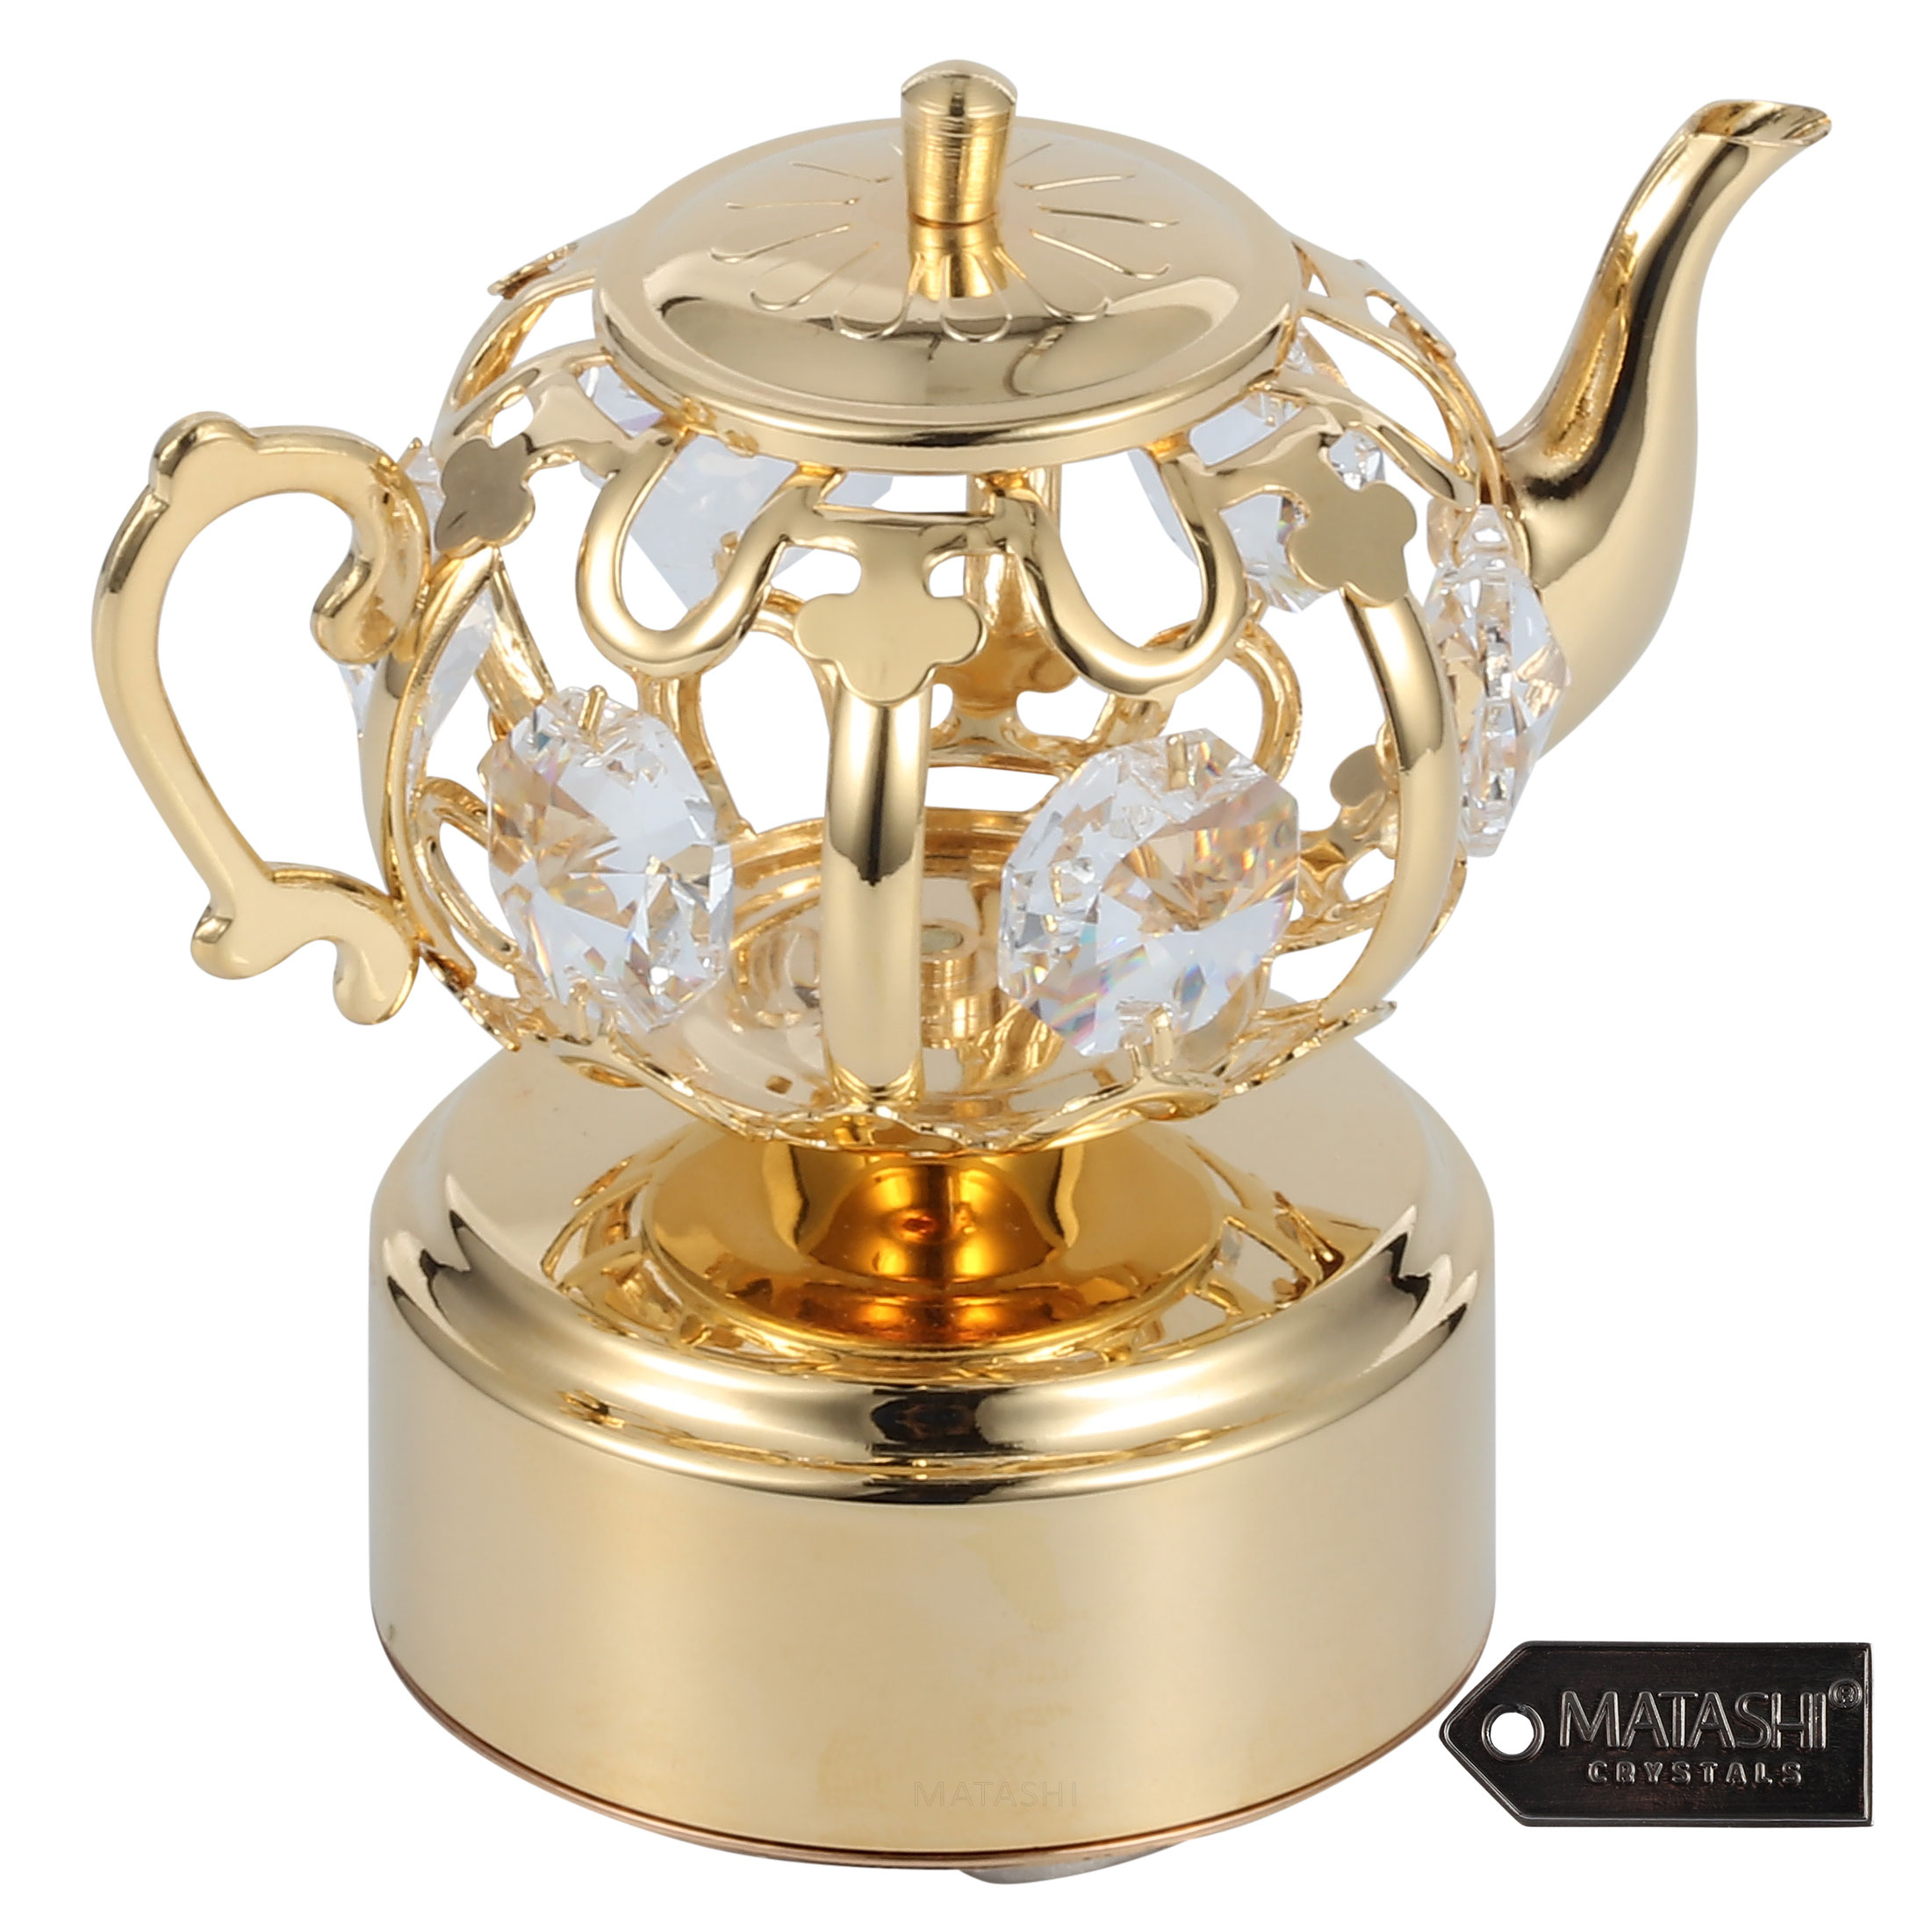 Matashi 24K Gold Plated Music Box With Crystal Studded Teapot Figurine - Fur Elise